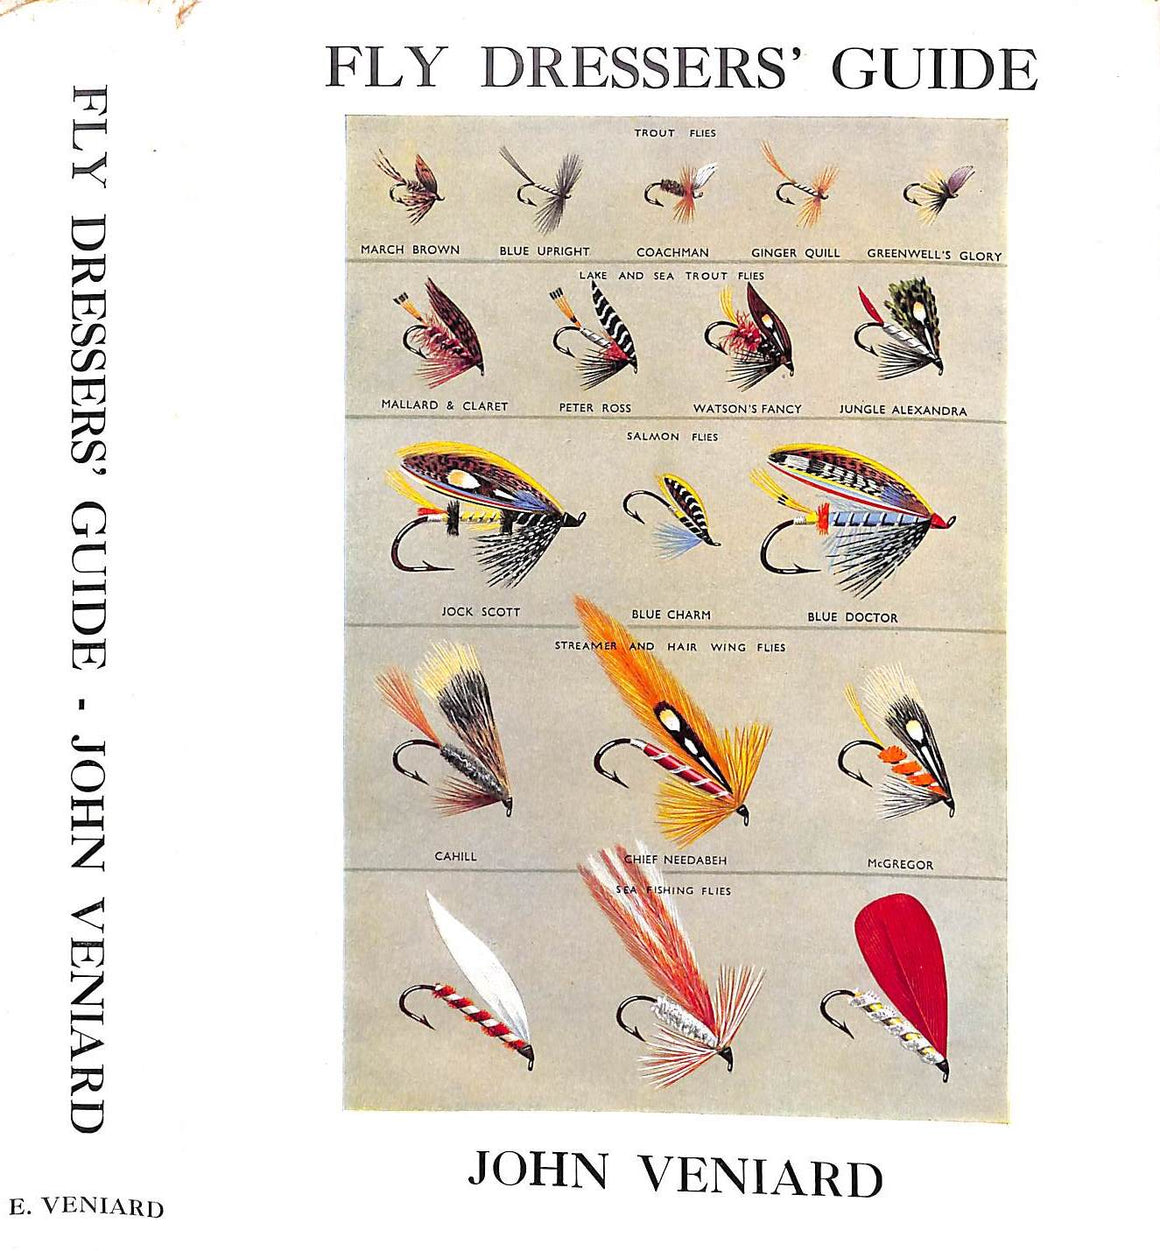 "Fly Dressers' Guide" 1953 VENIARD, John